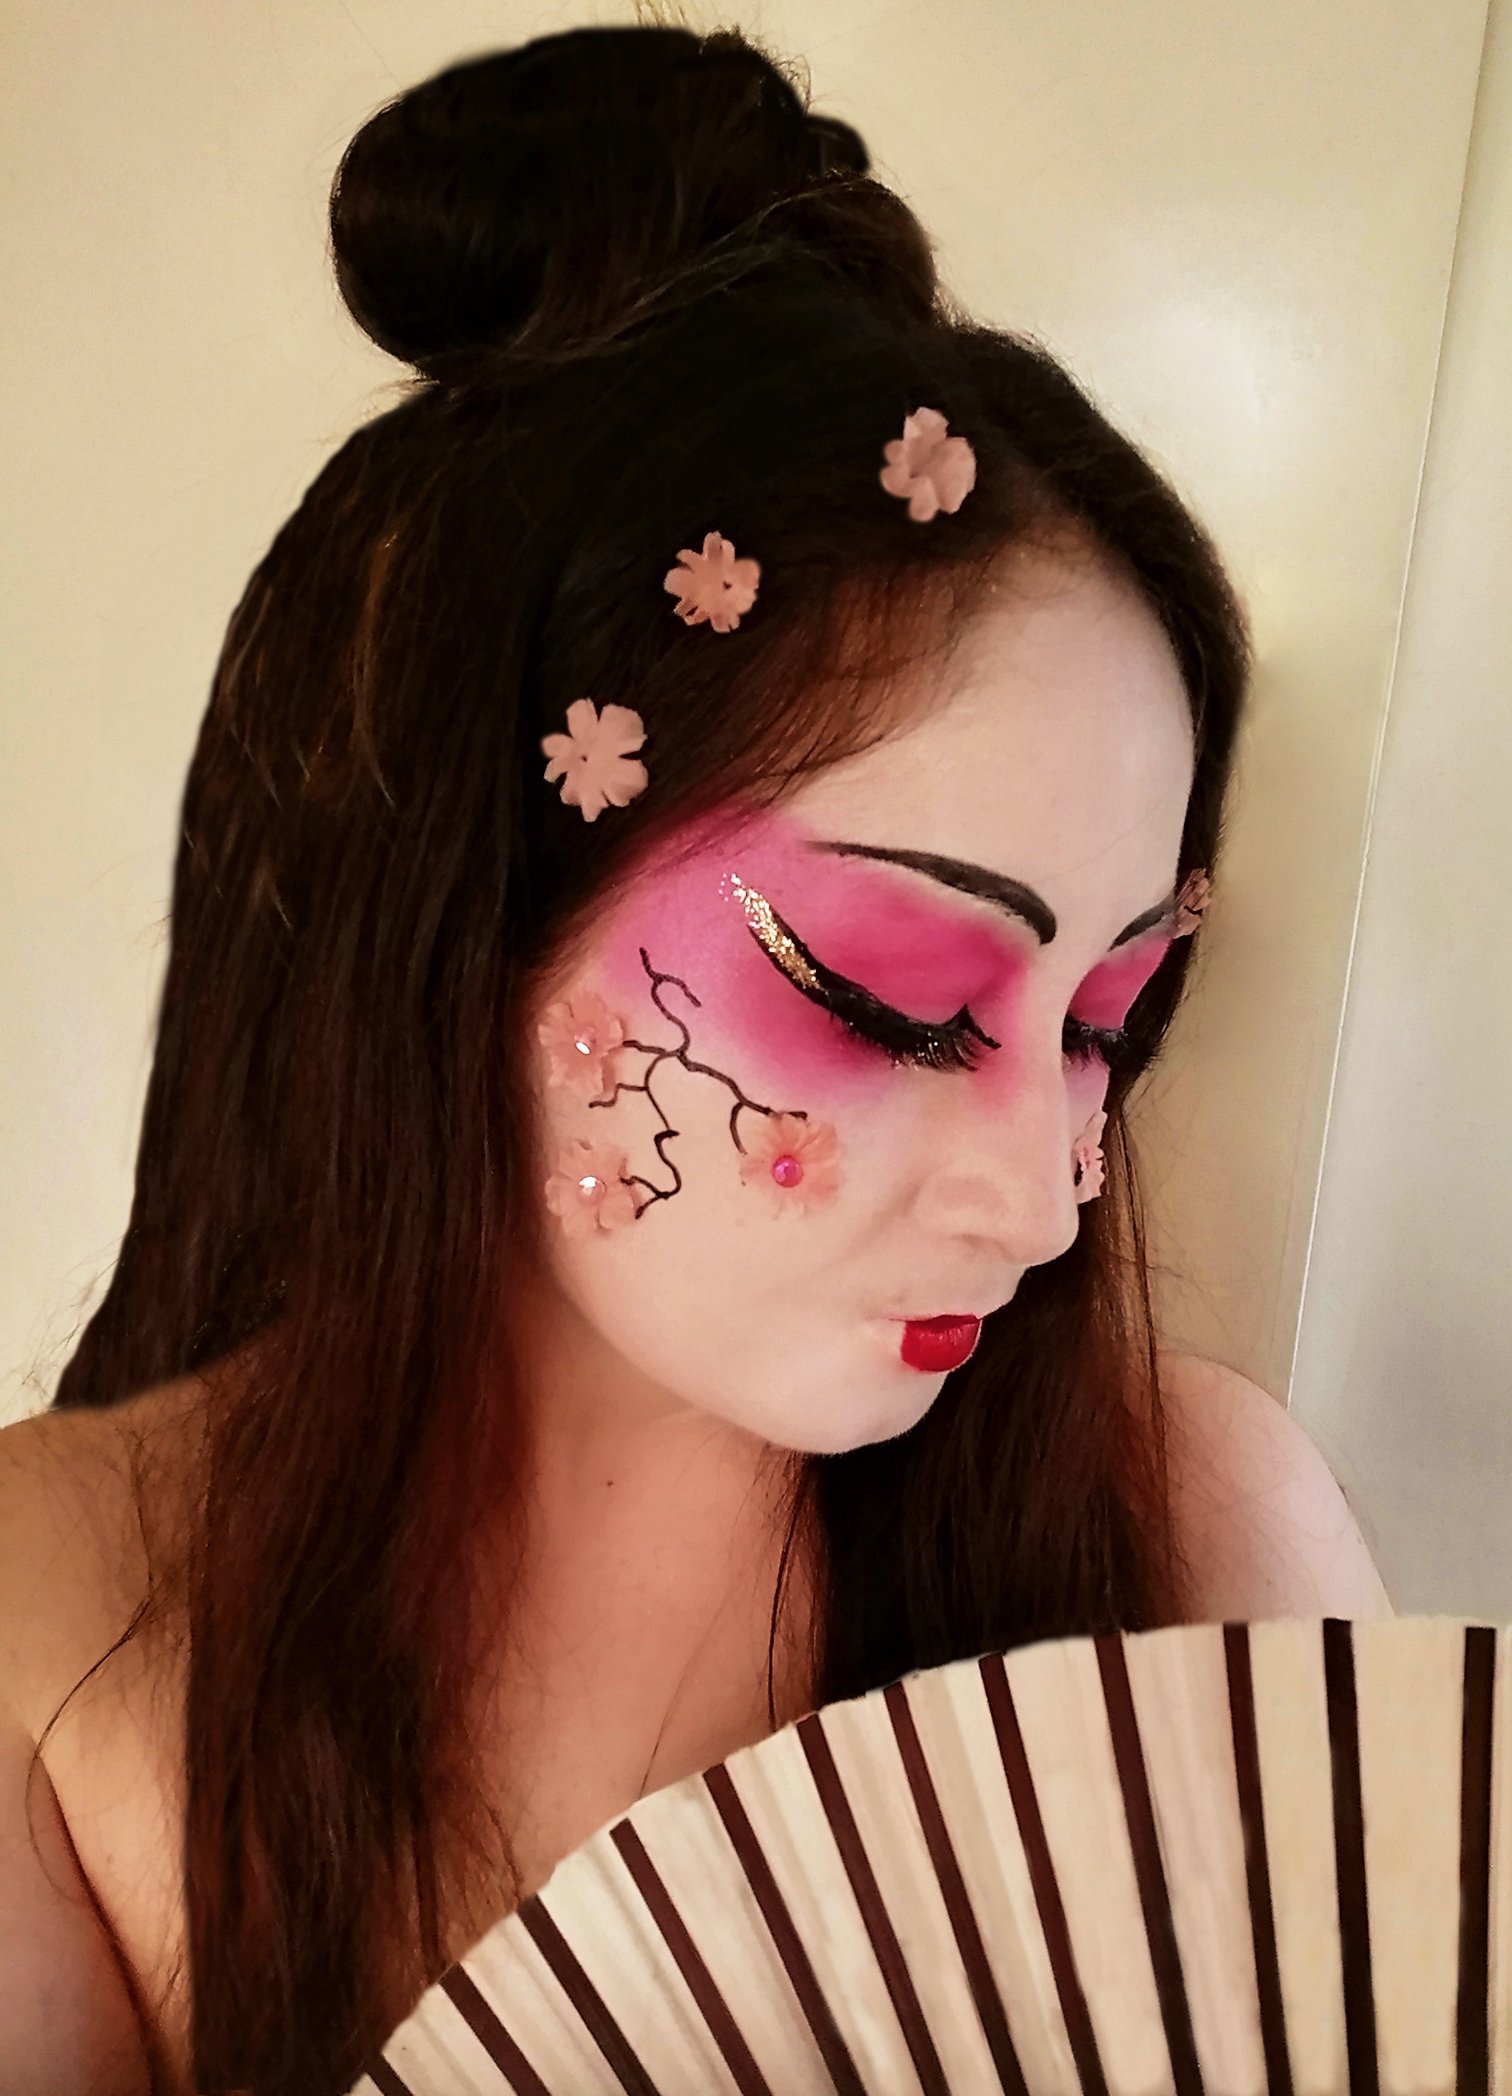 Brenda Magical Human on Twitter: "#maquillaje #maquillajeartistico #japon # geisha #sakura #flordecerezo #arte #artistamexicana #artista #makeup  #artisticmakeup #japan #cherryblossomart #art #mexicanartist #artist  https://t.co/i27TO0fB52" / Twitter